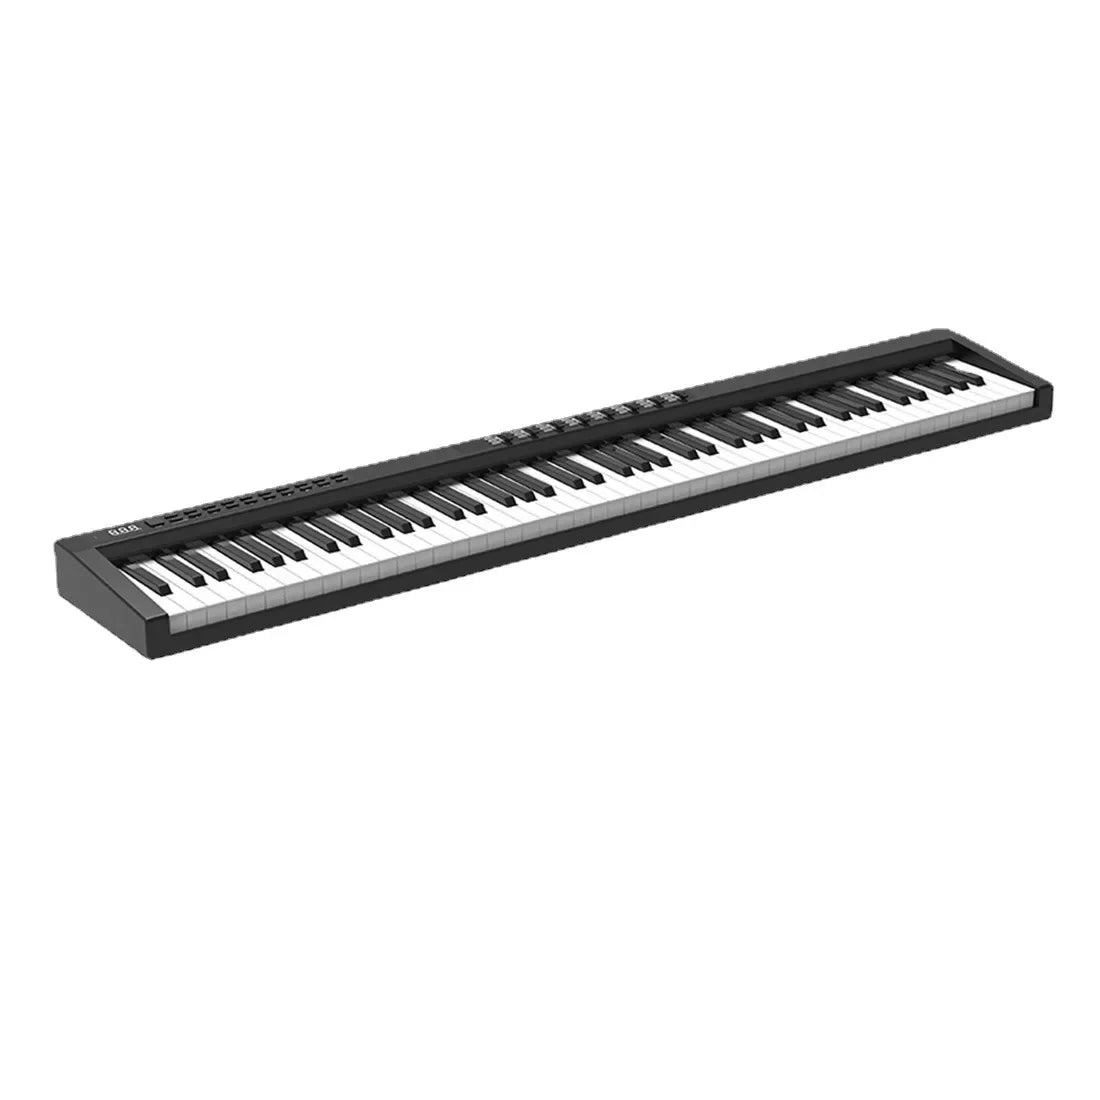 88 Keys Musical Keyboard Professional Piano Digital Aldult Electronic Organ Flexible Controller Teclado Musical Entertainment